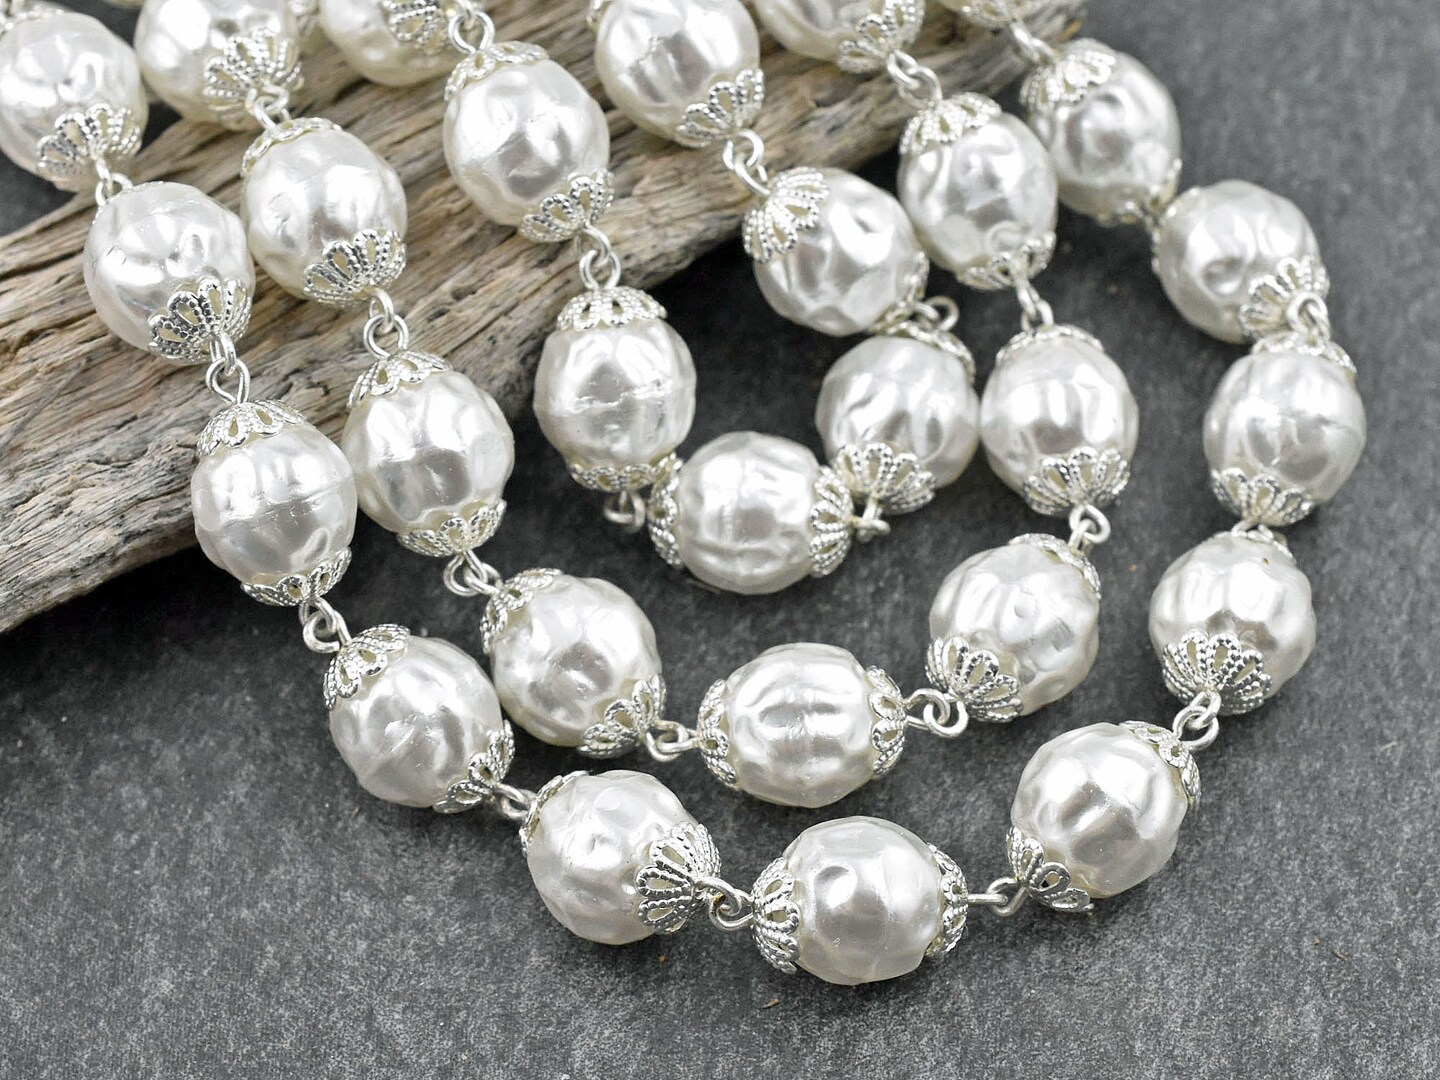 10mm Czech Glass White Baroque Pearl Chain w/ Bright Silver